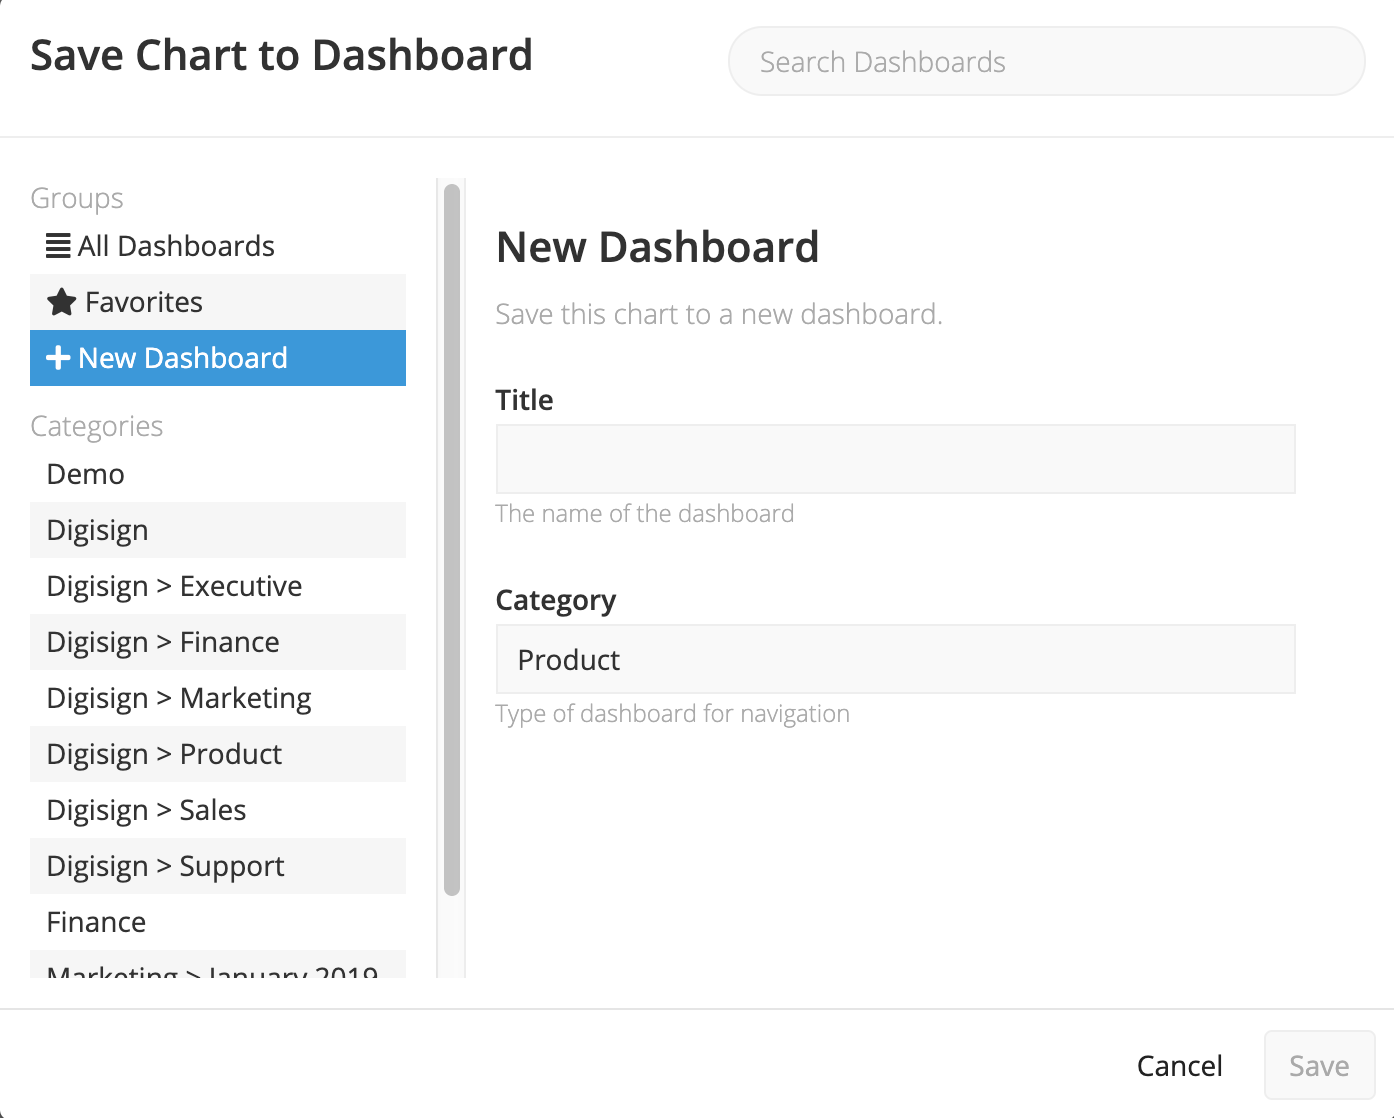 Save ad hoc chart to new dashboard - Data Explorer